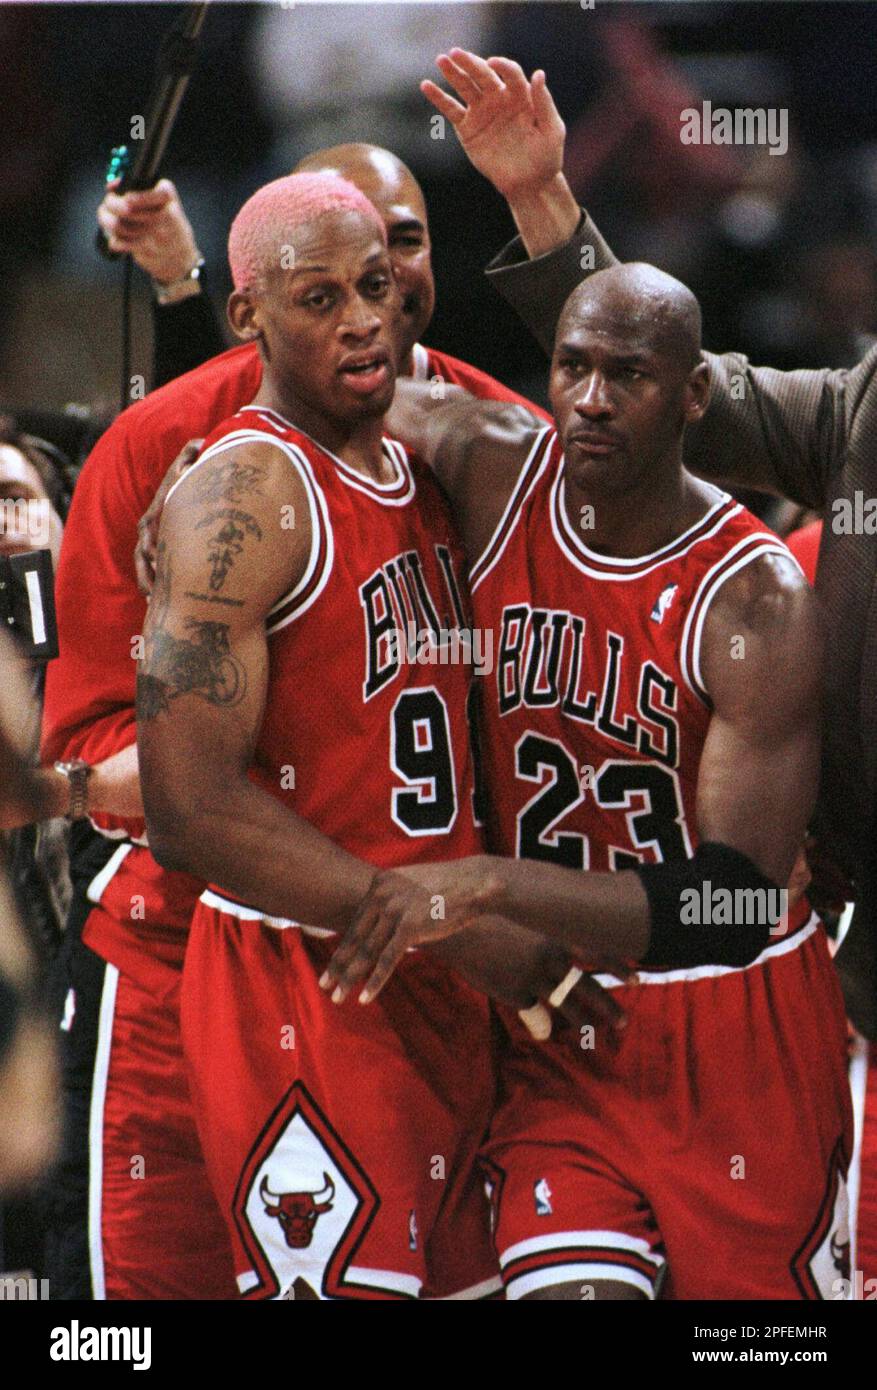 1996 Finals Game 2: Rodman pulls Bulls to finish line